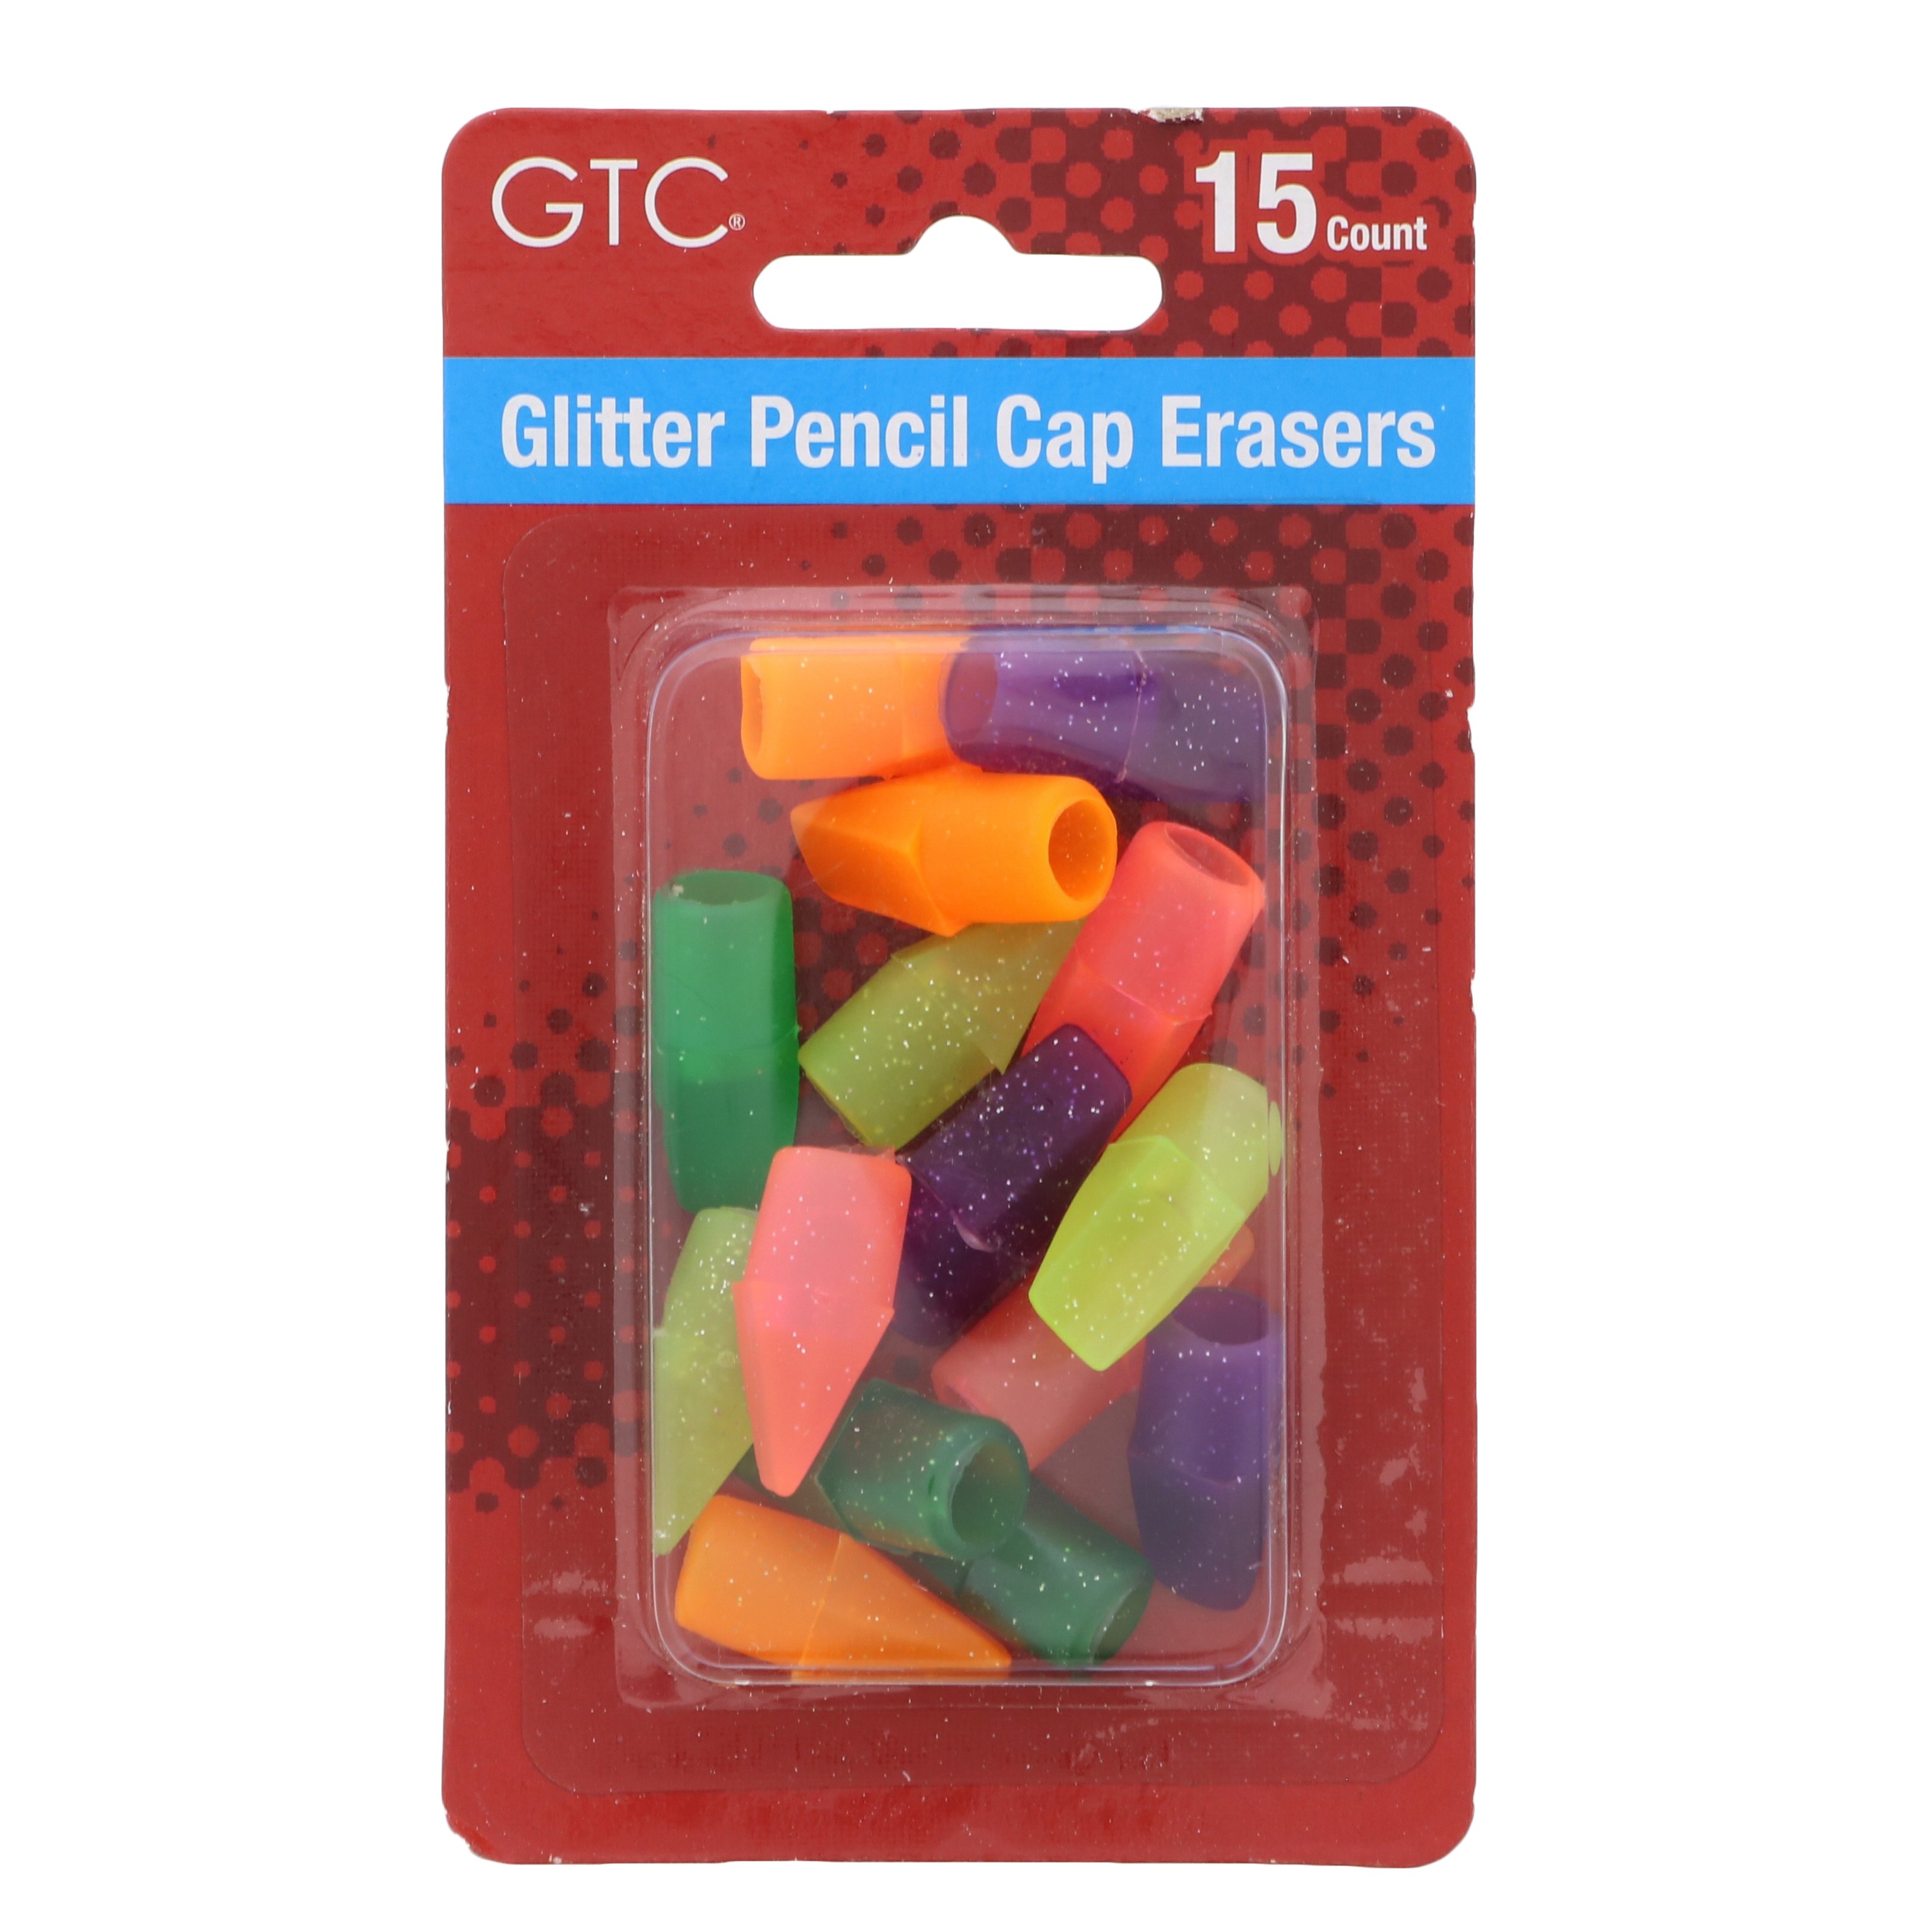 GTC Pencil Glitter Eraser Cap, 15 Count